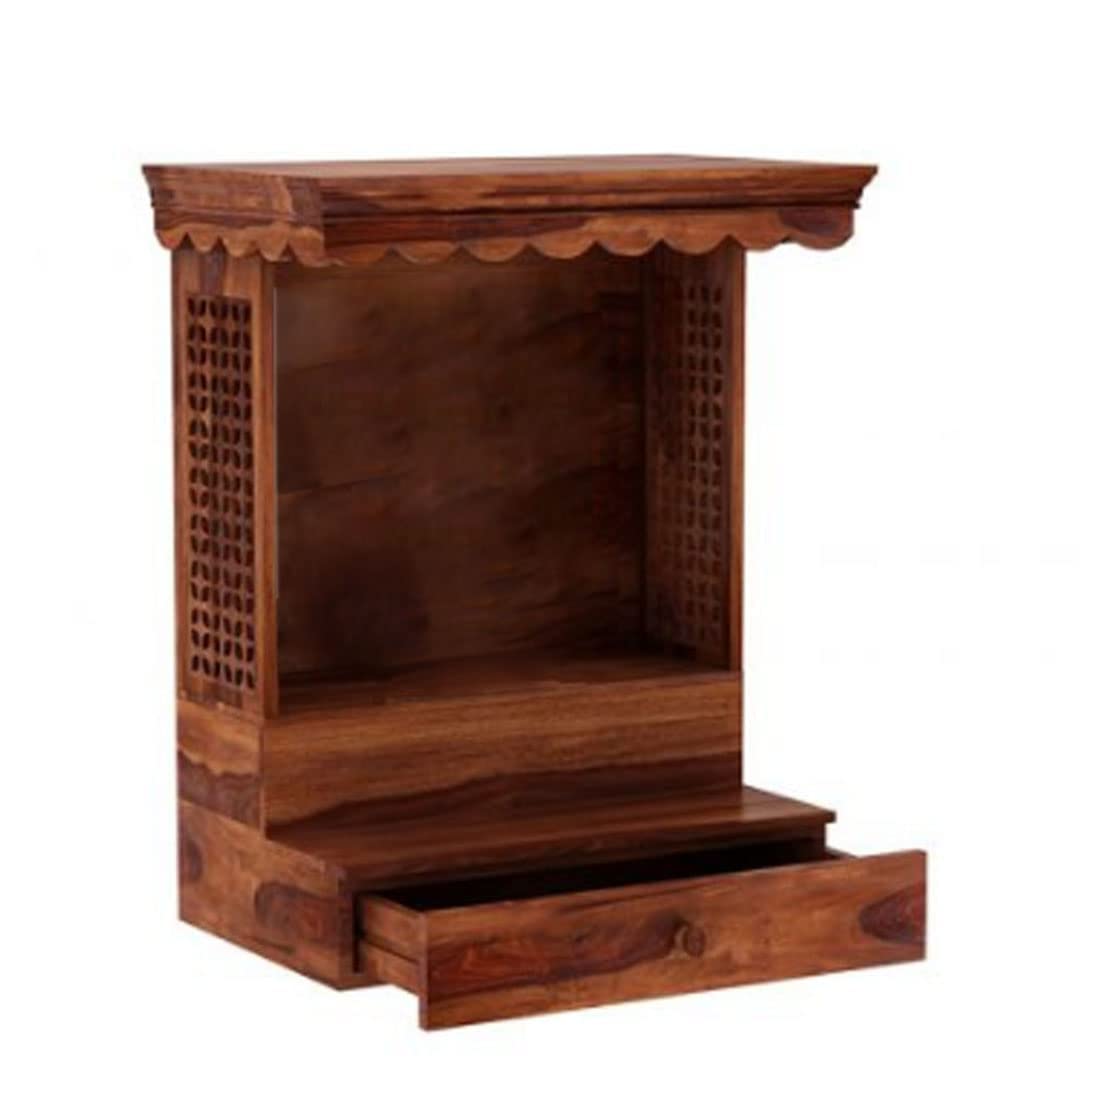 Woodmarwar Solid Sheesham Wood Temple(Mandir)In Honey Finish For Home & Office Furniture